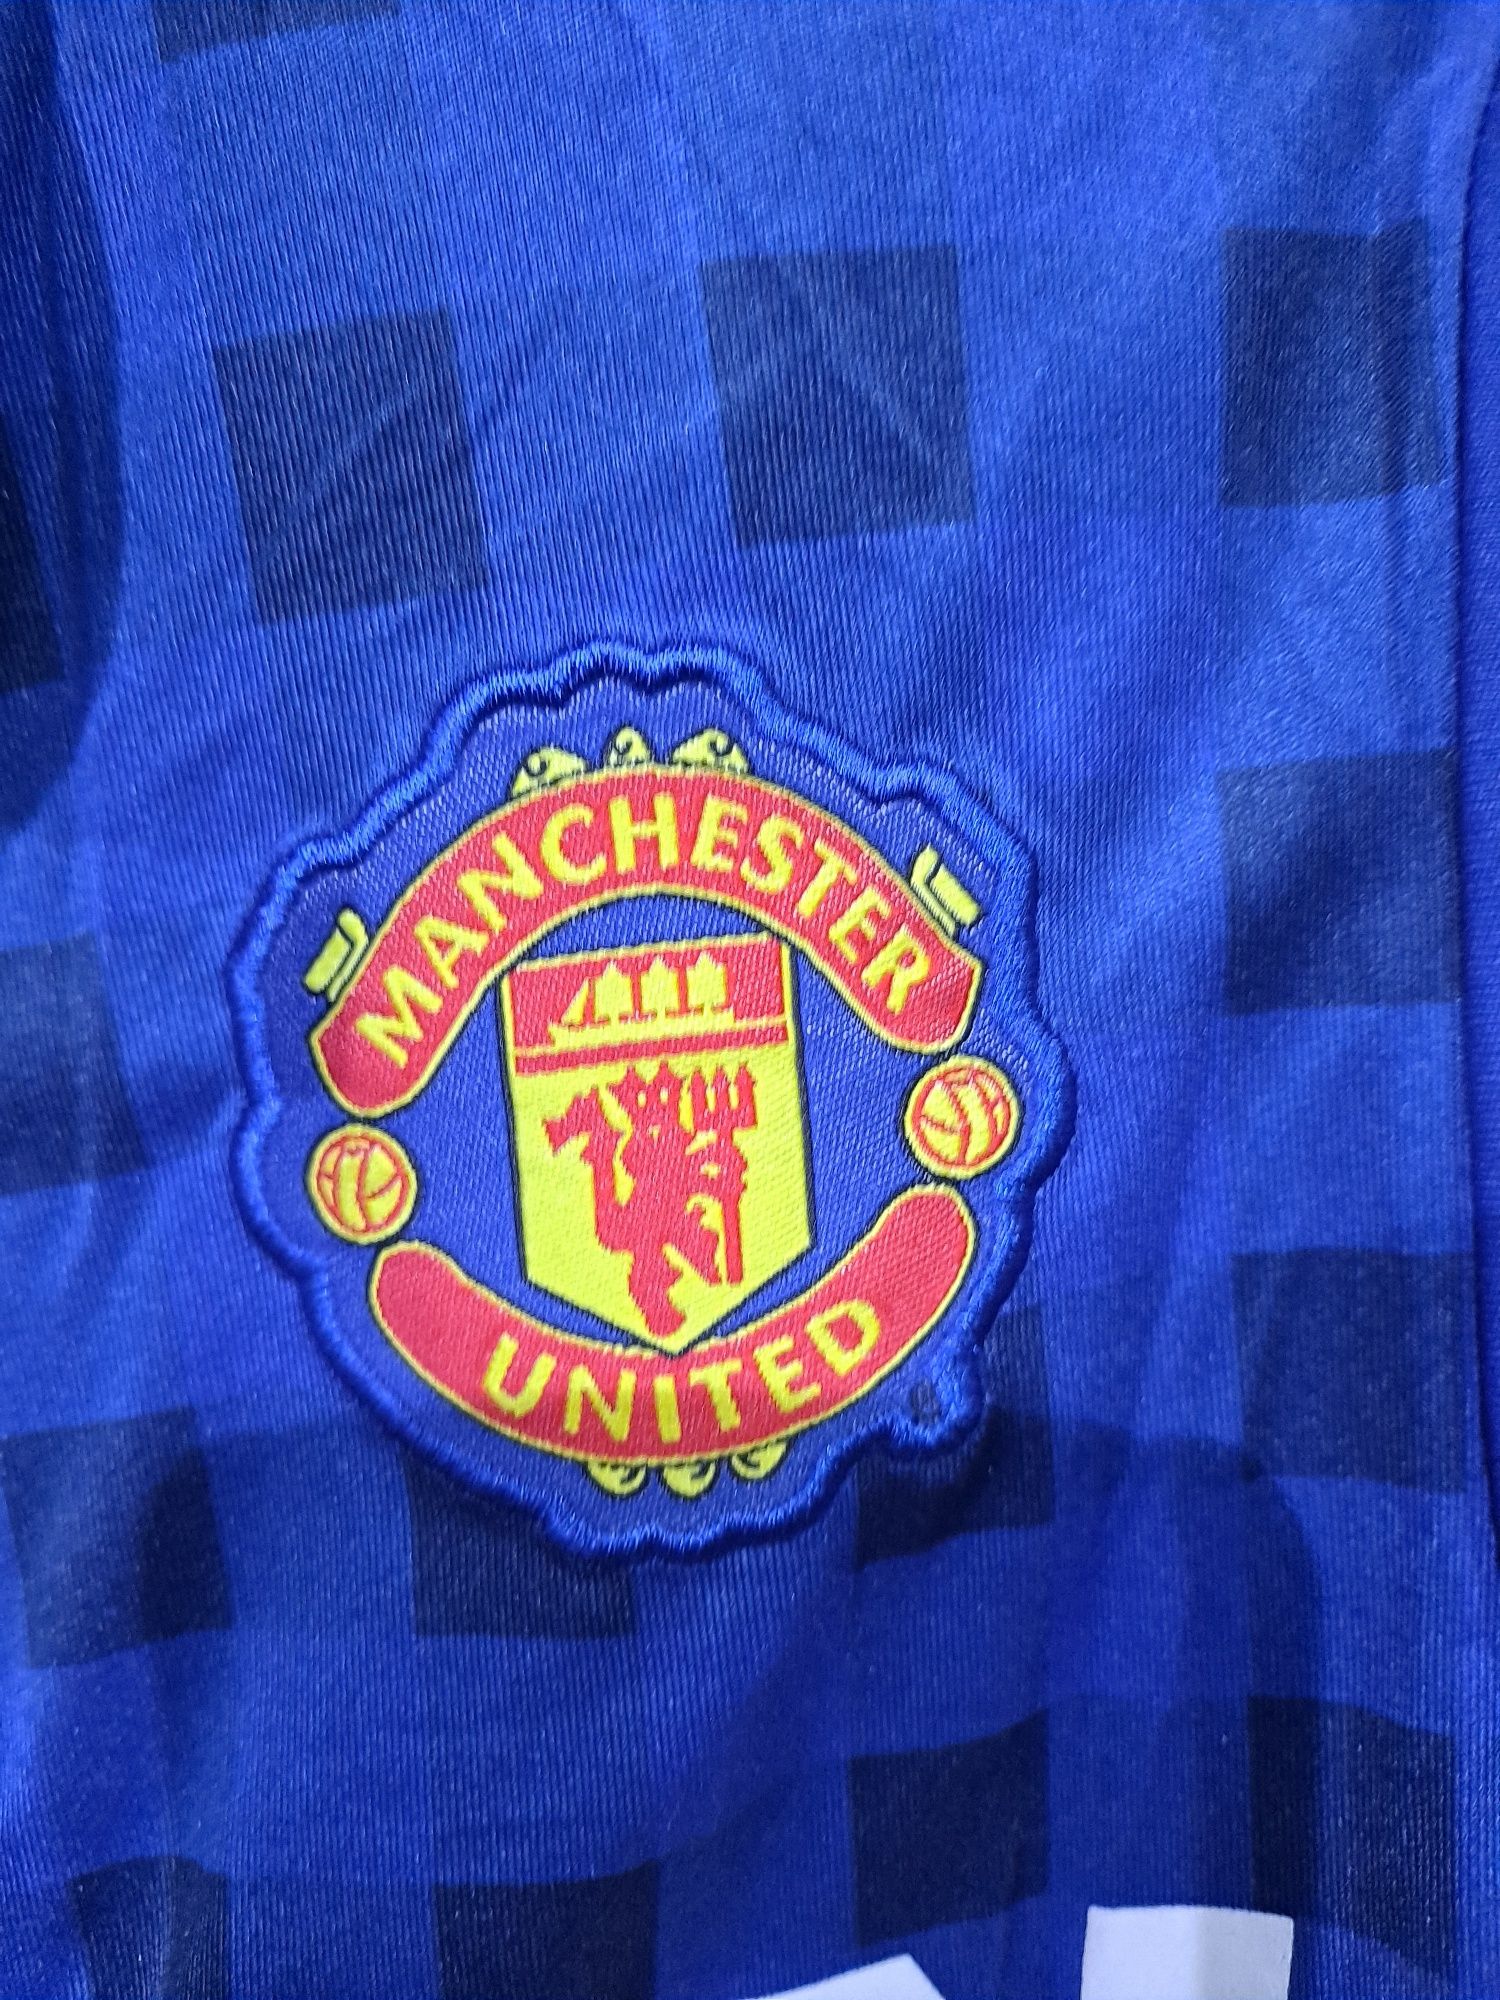 Manchester United. Koszulka klubowa podwójna. Rozmiar M/L